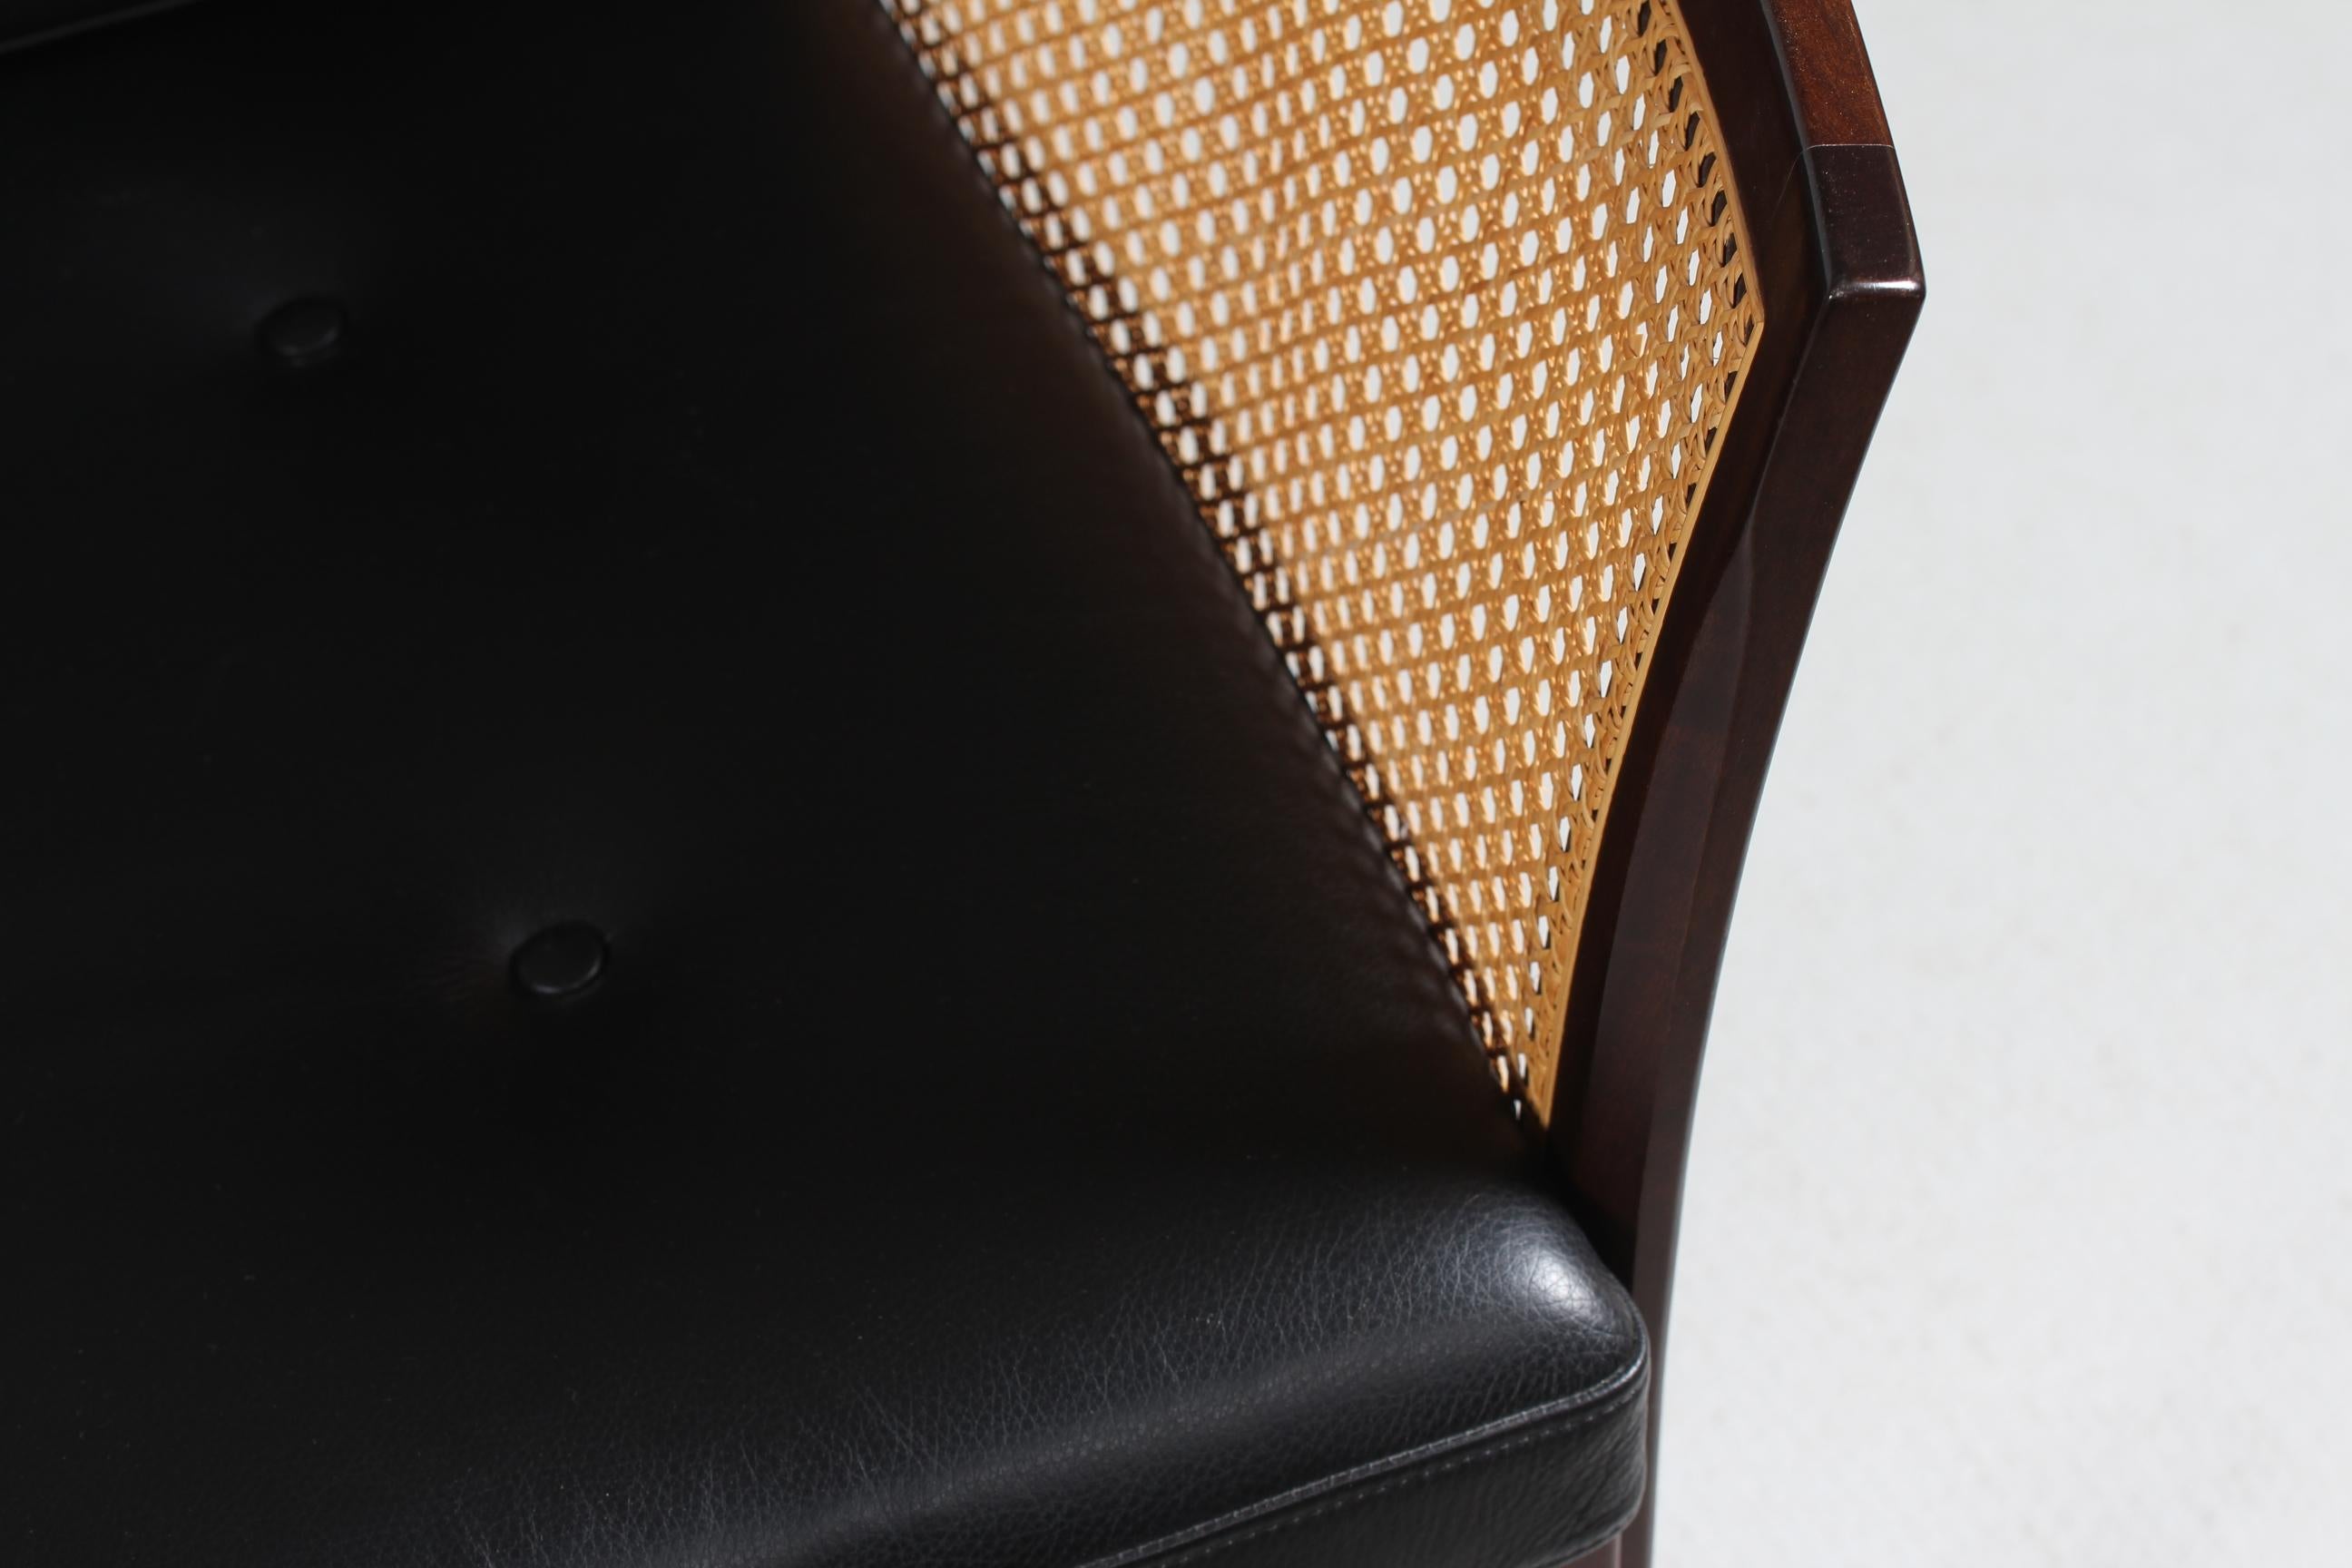 Cane Pair Illum Wikkelsø Plexus Chair of Mahogany Black Leather Upholstery, Denmark